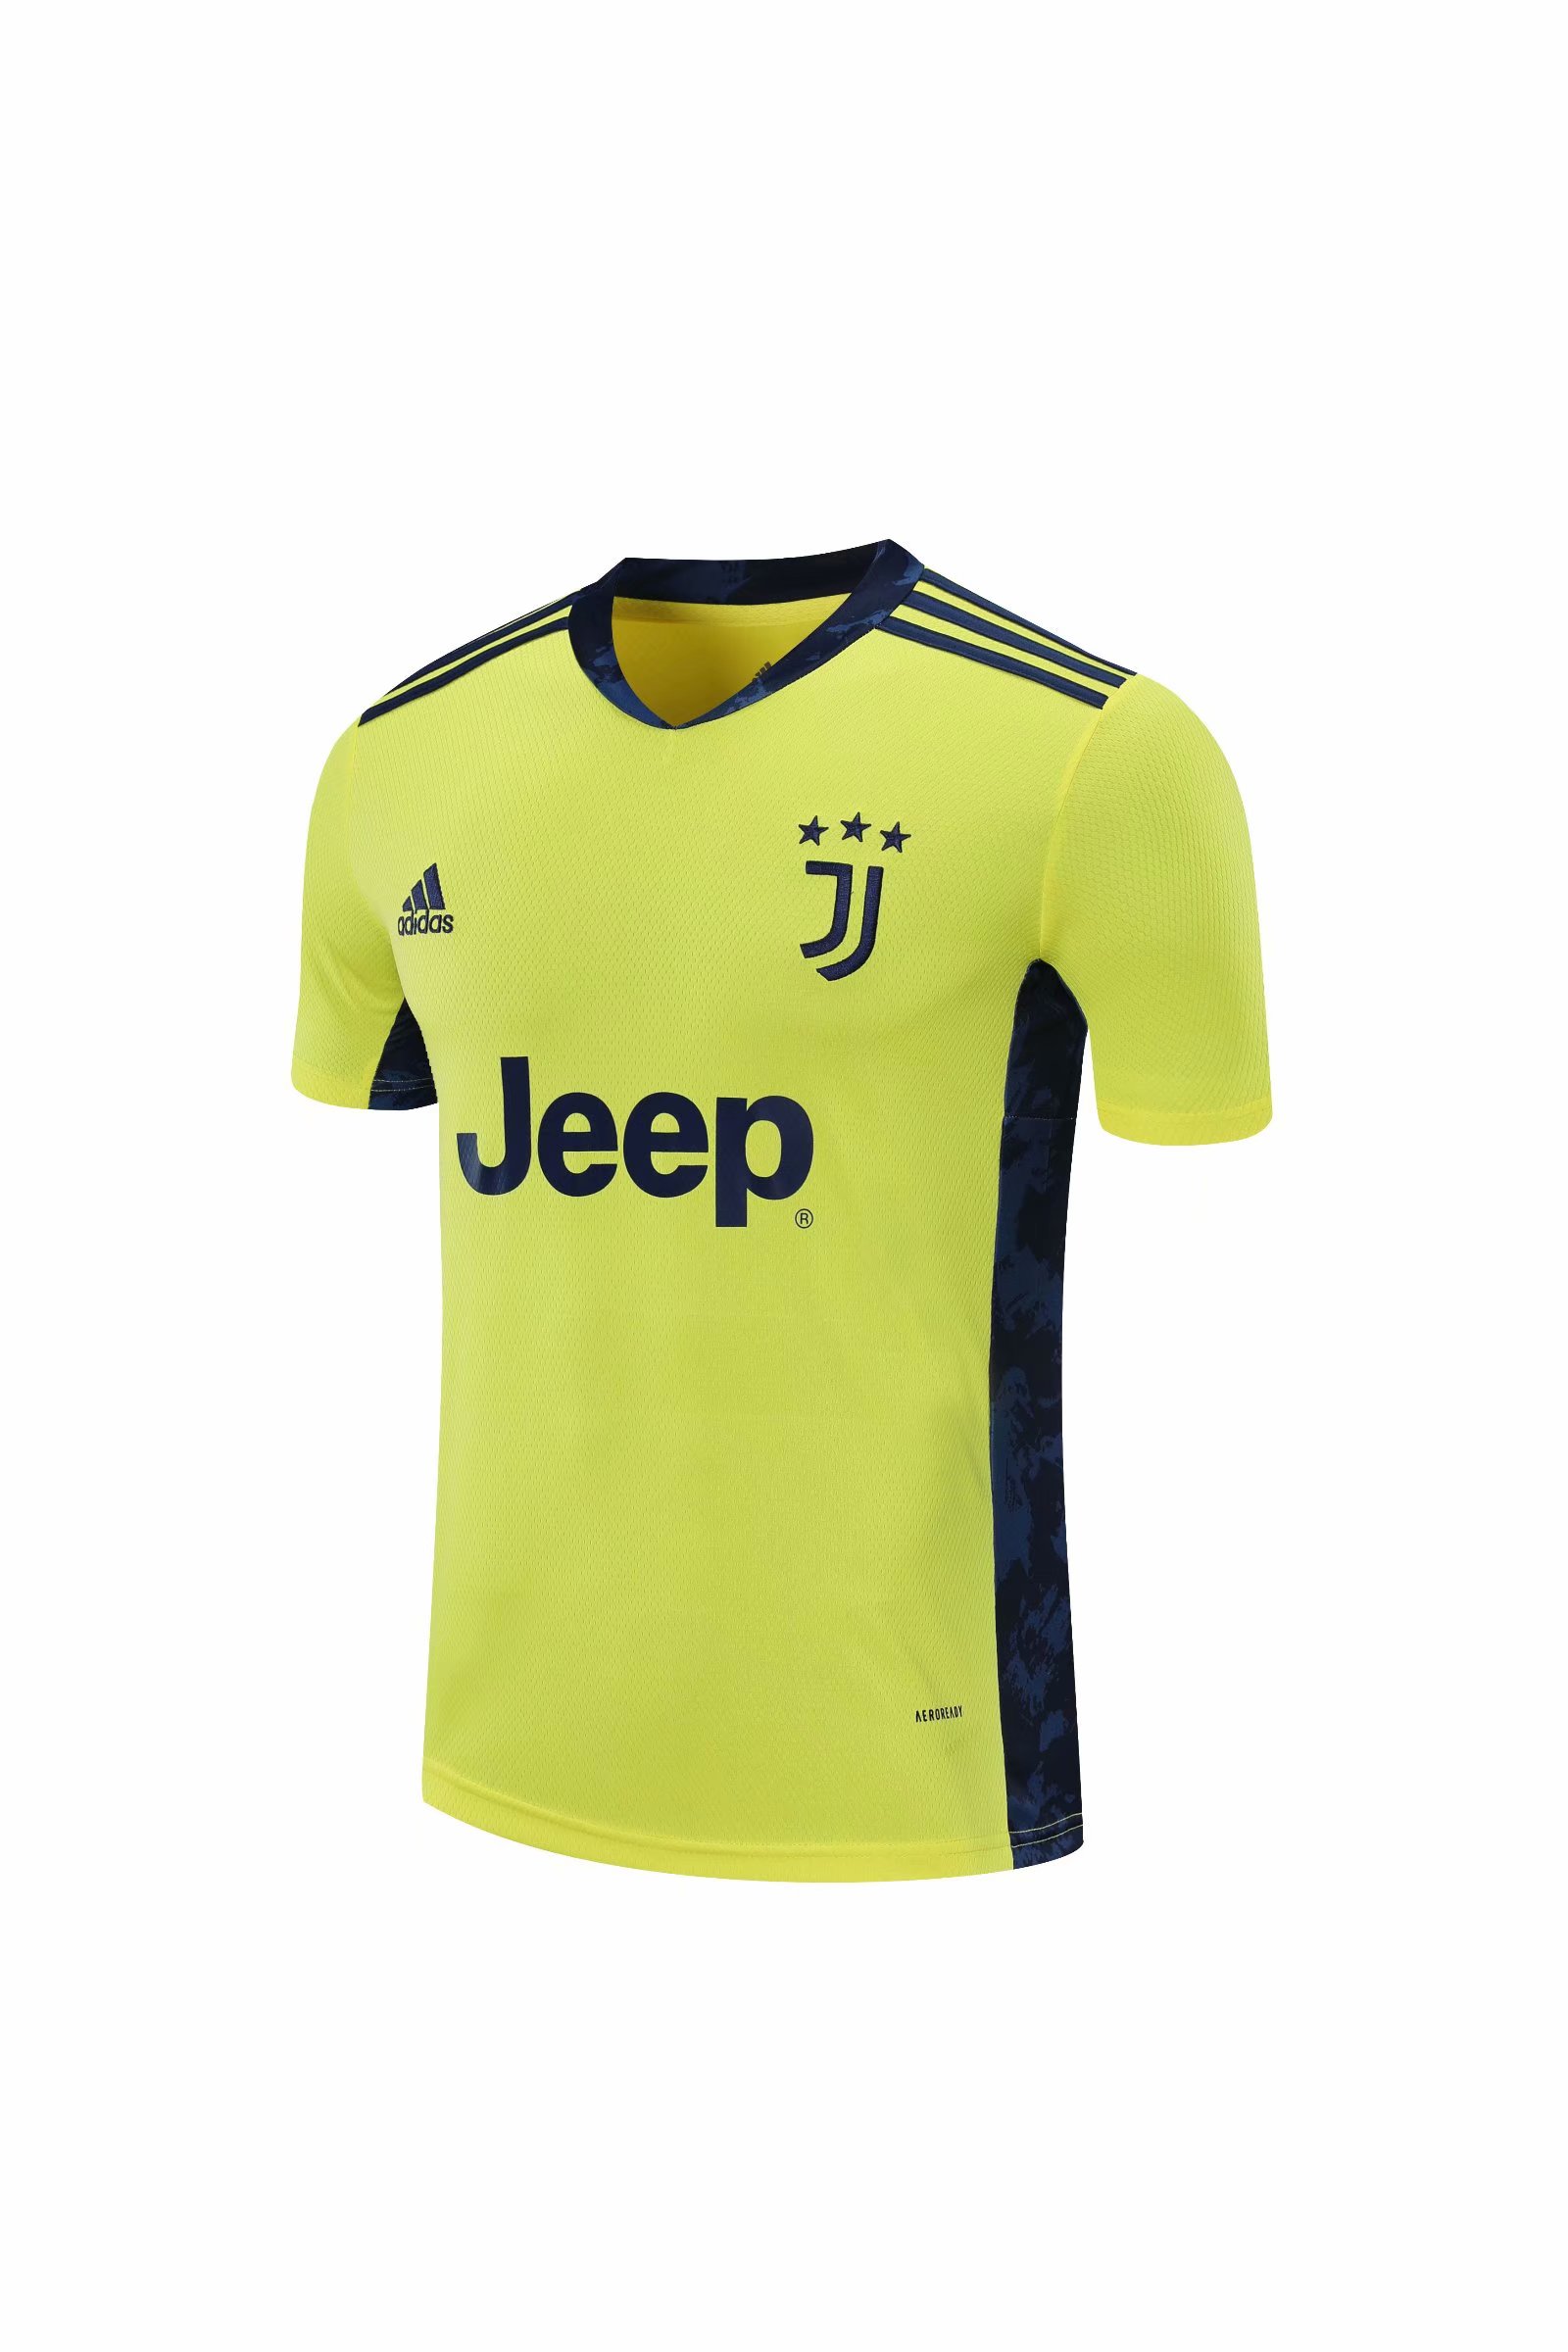 Juventus Goalkeeper Long sleeve soccer jersey 2020-2021